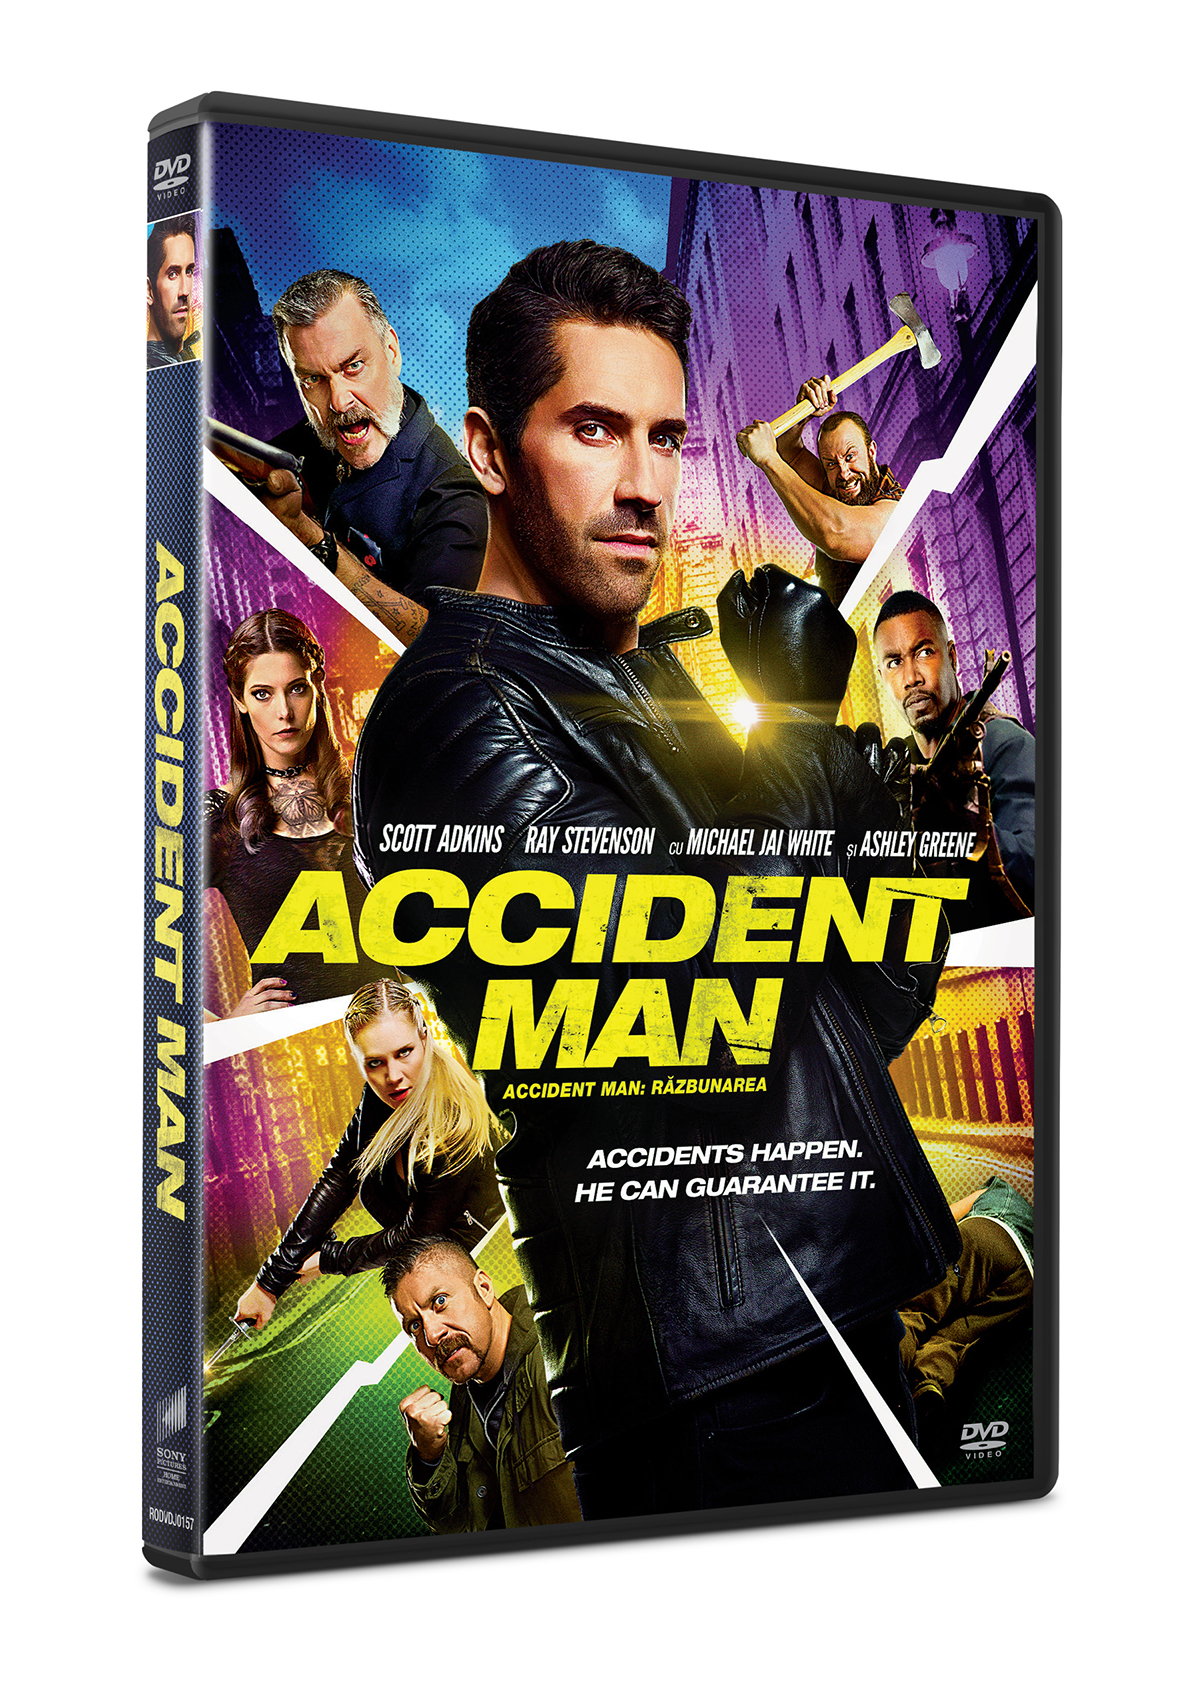 Accident Man: Razbunarea / Accident Man